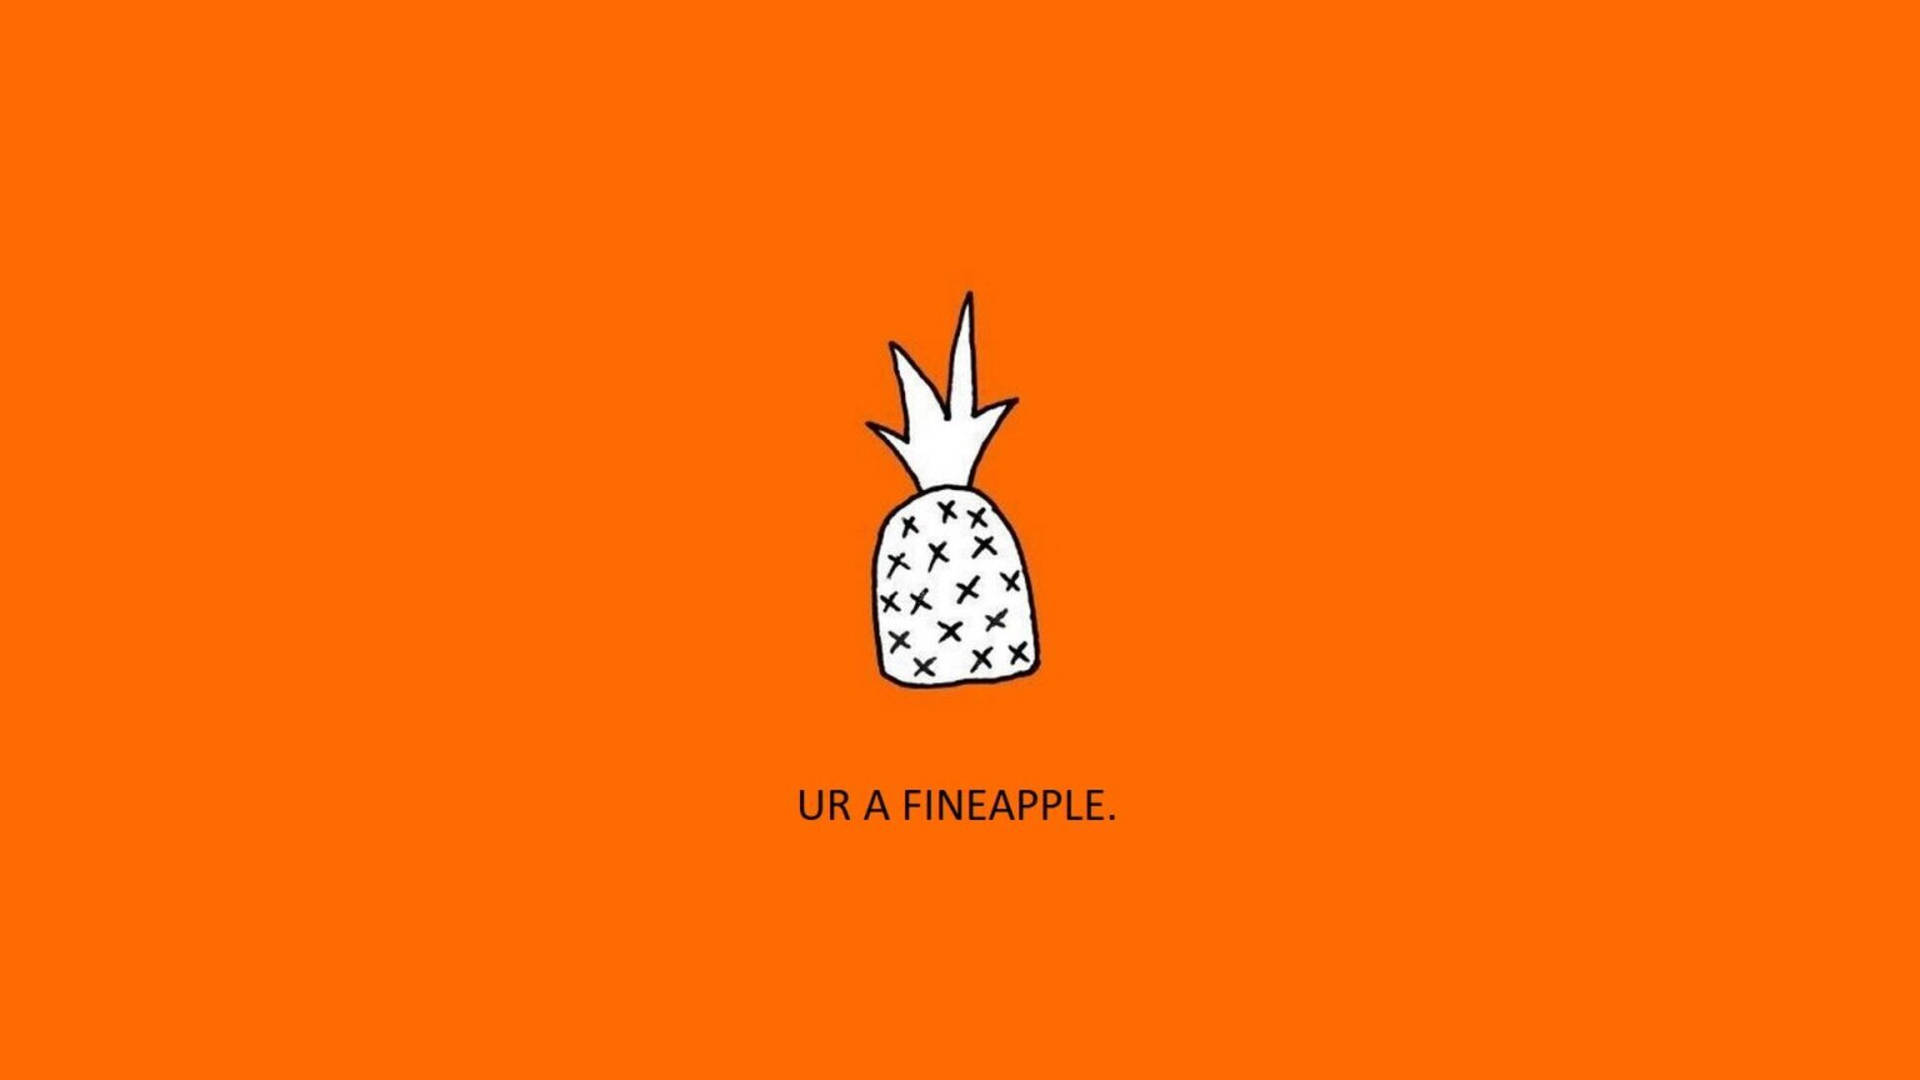 Minimalist Pineapple Orange Aesthetic Background